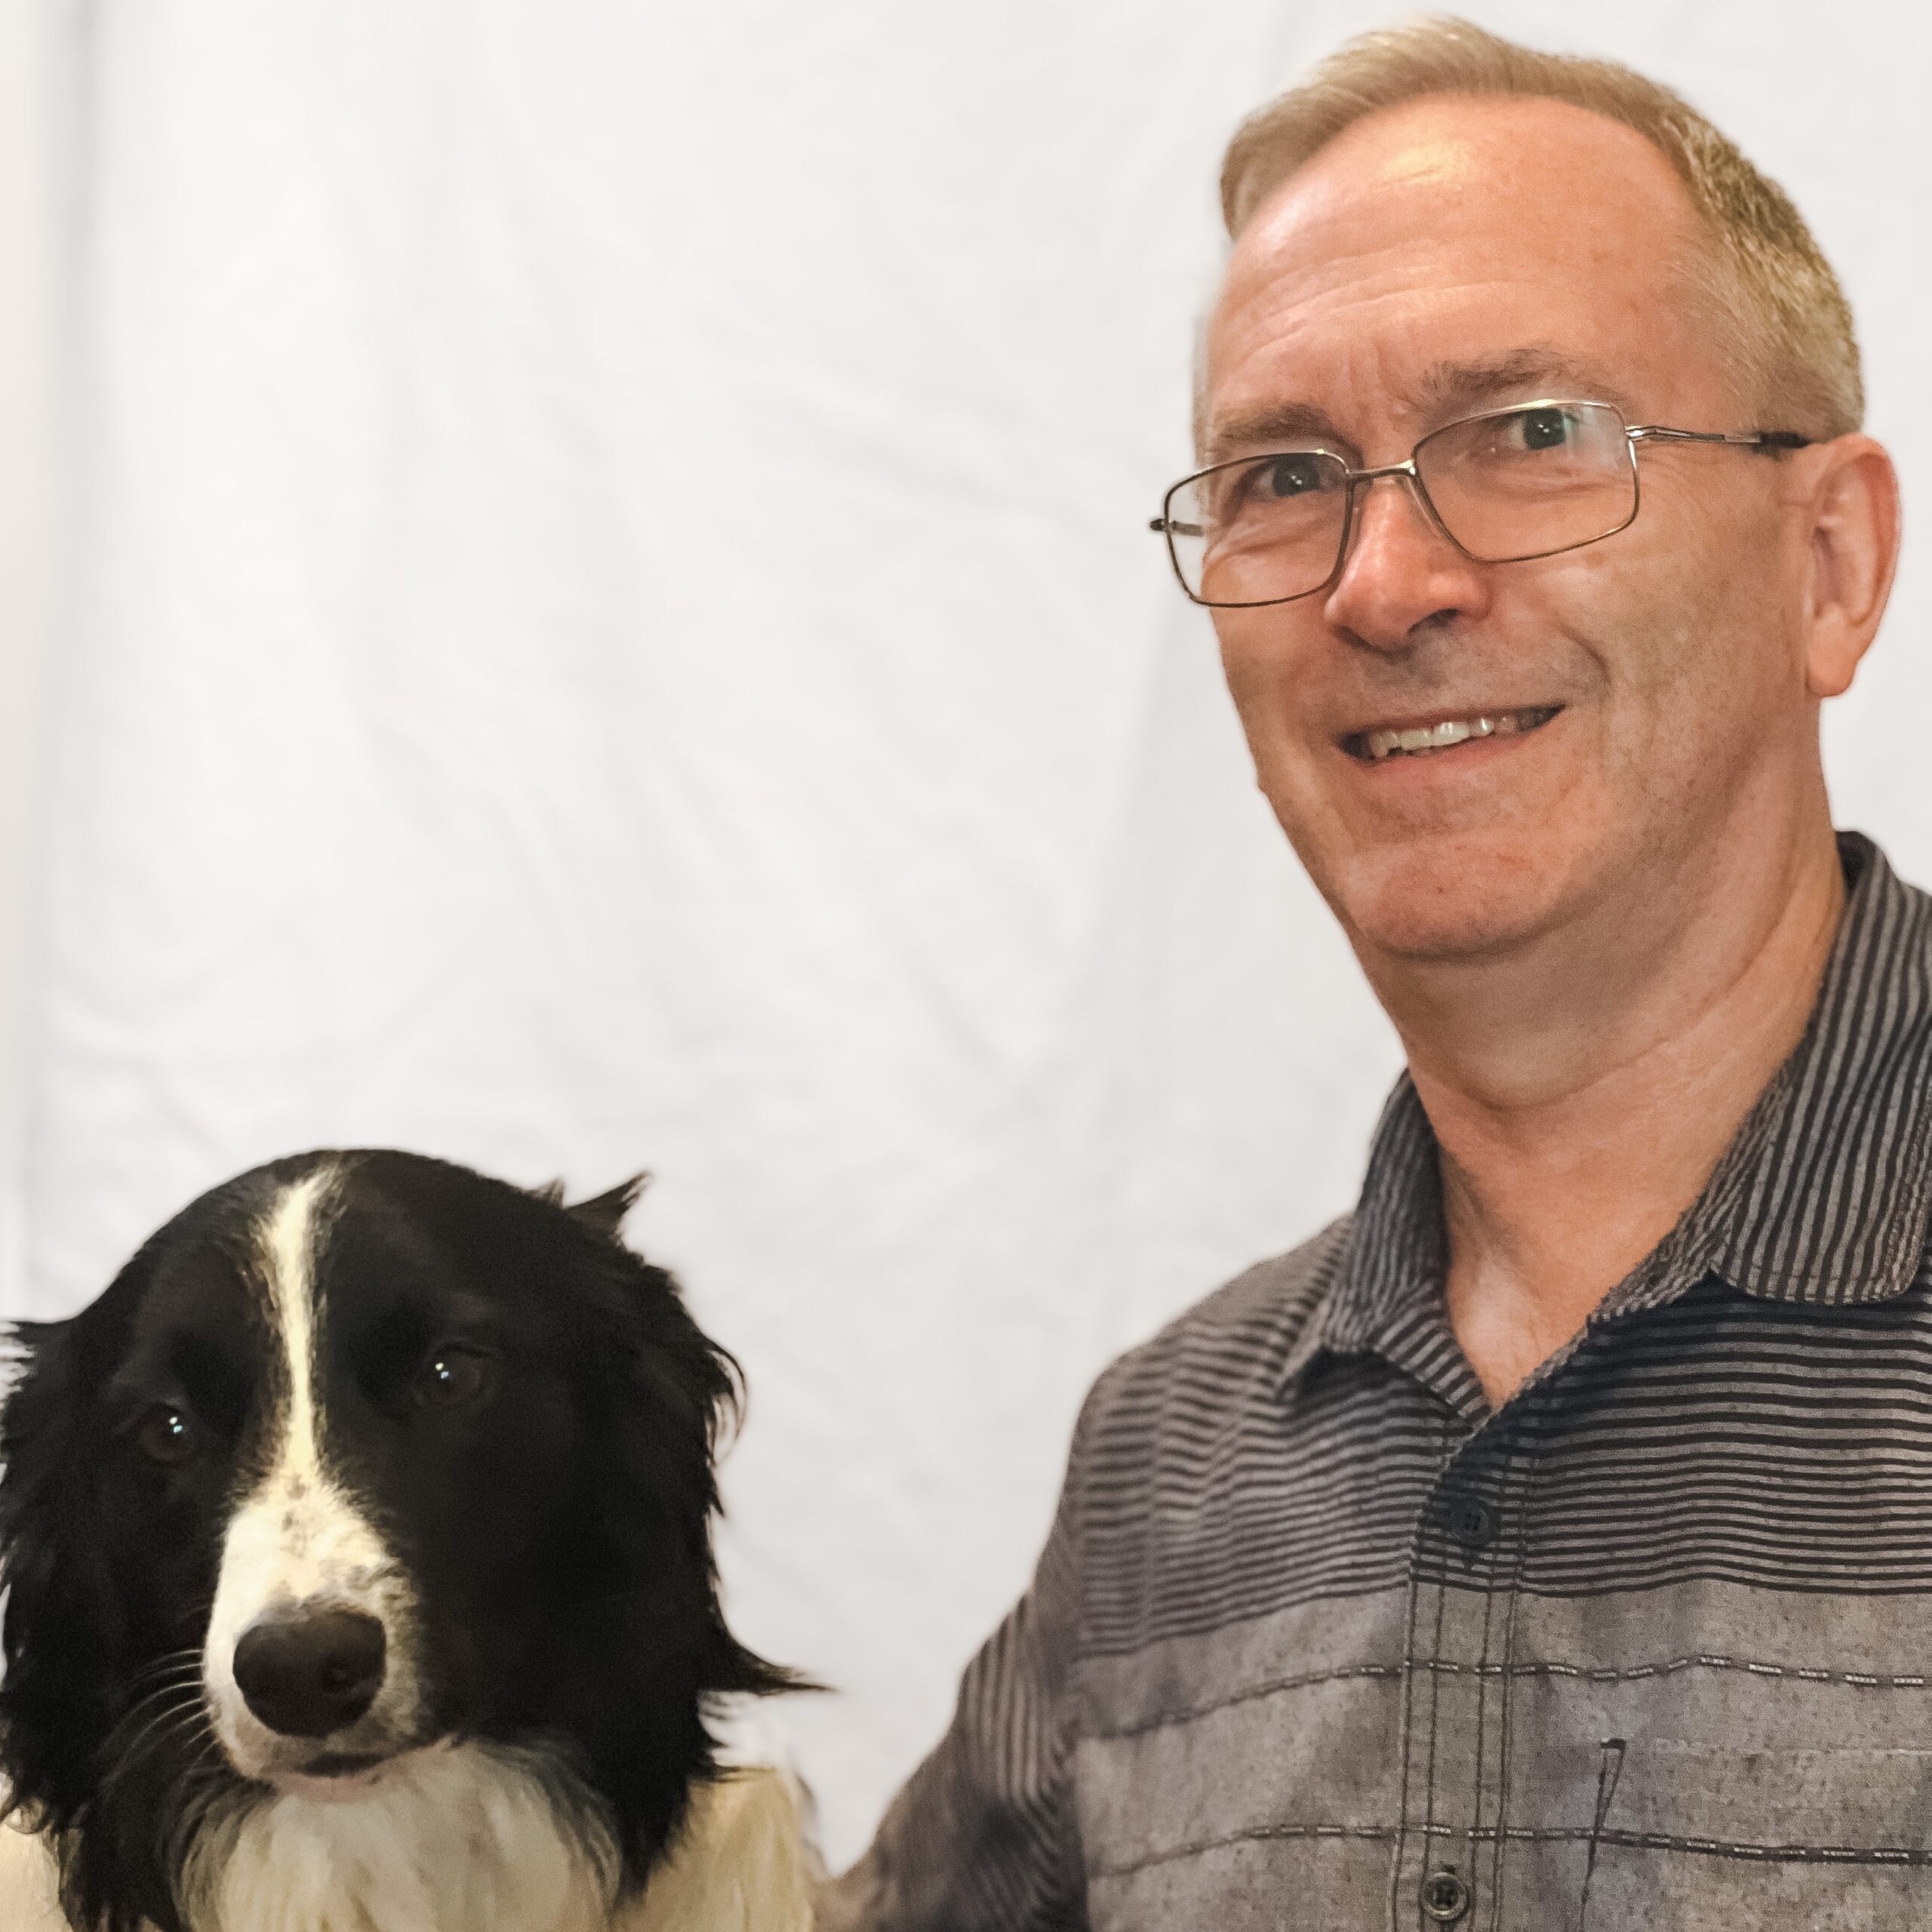 John Scarlett and his black and white dog Kaos